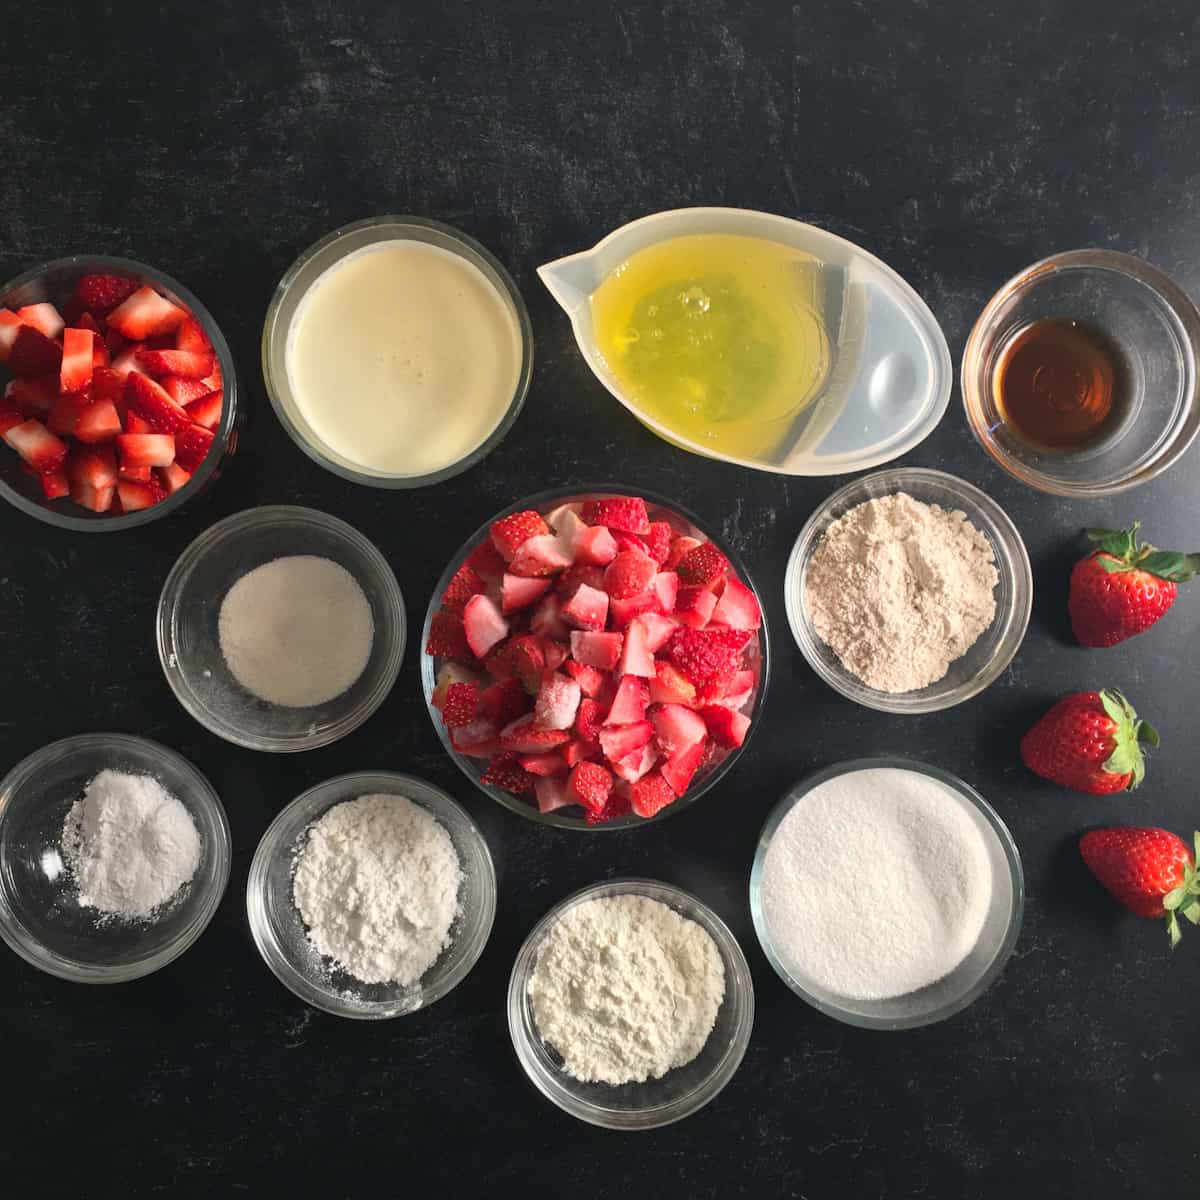 sugar free strawberry shortcake ingredients